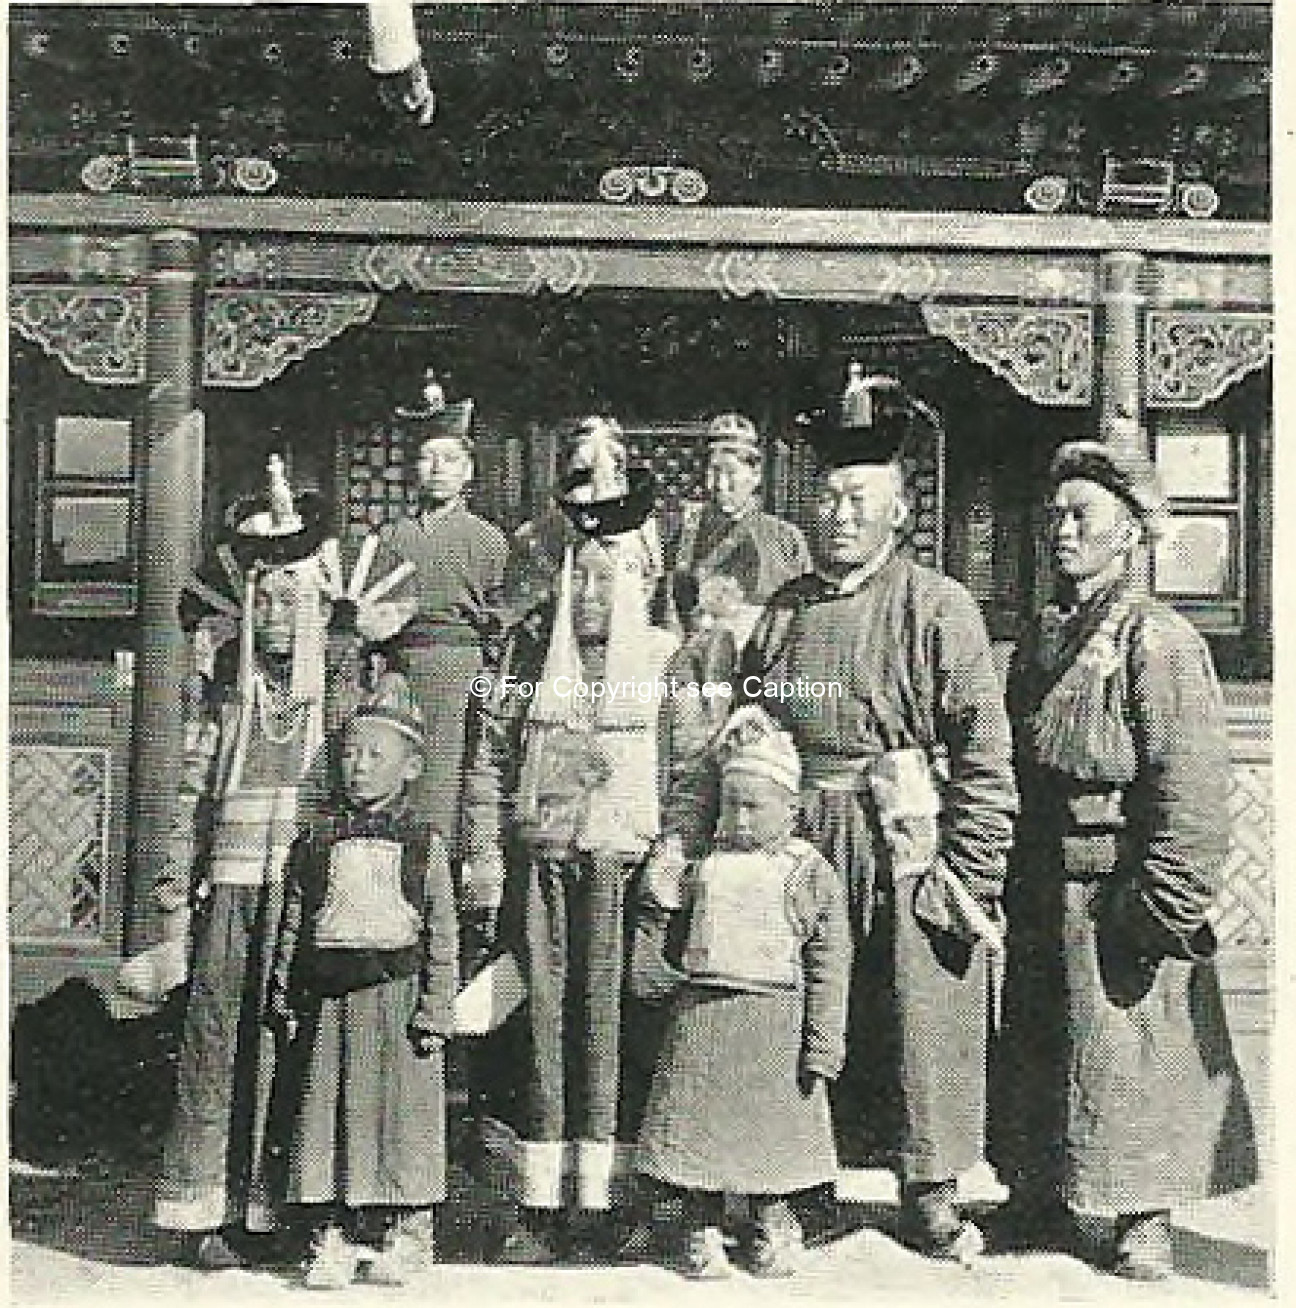 Said Süjig gün and his family in Urga. Binsteed, G. C., 